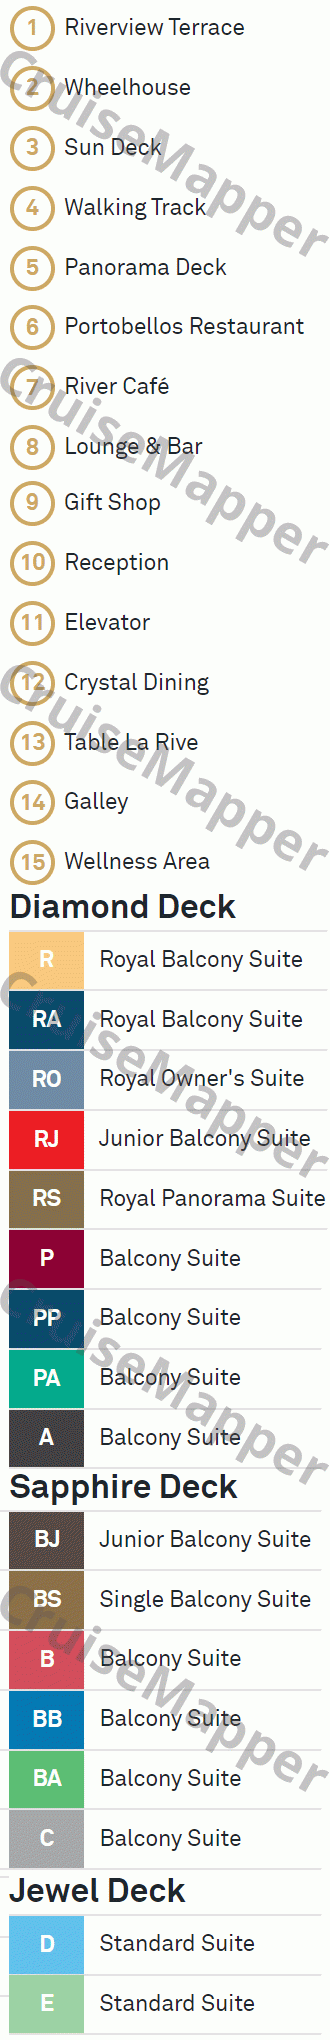 Scenic Ruby deck 1 plan (Jewel-Spa) legend